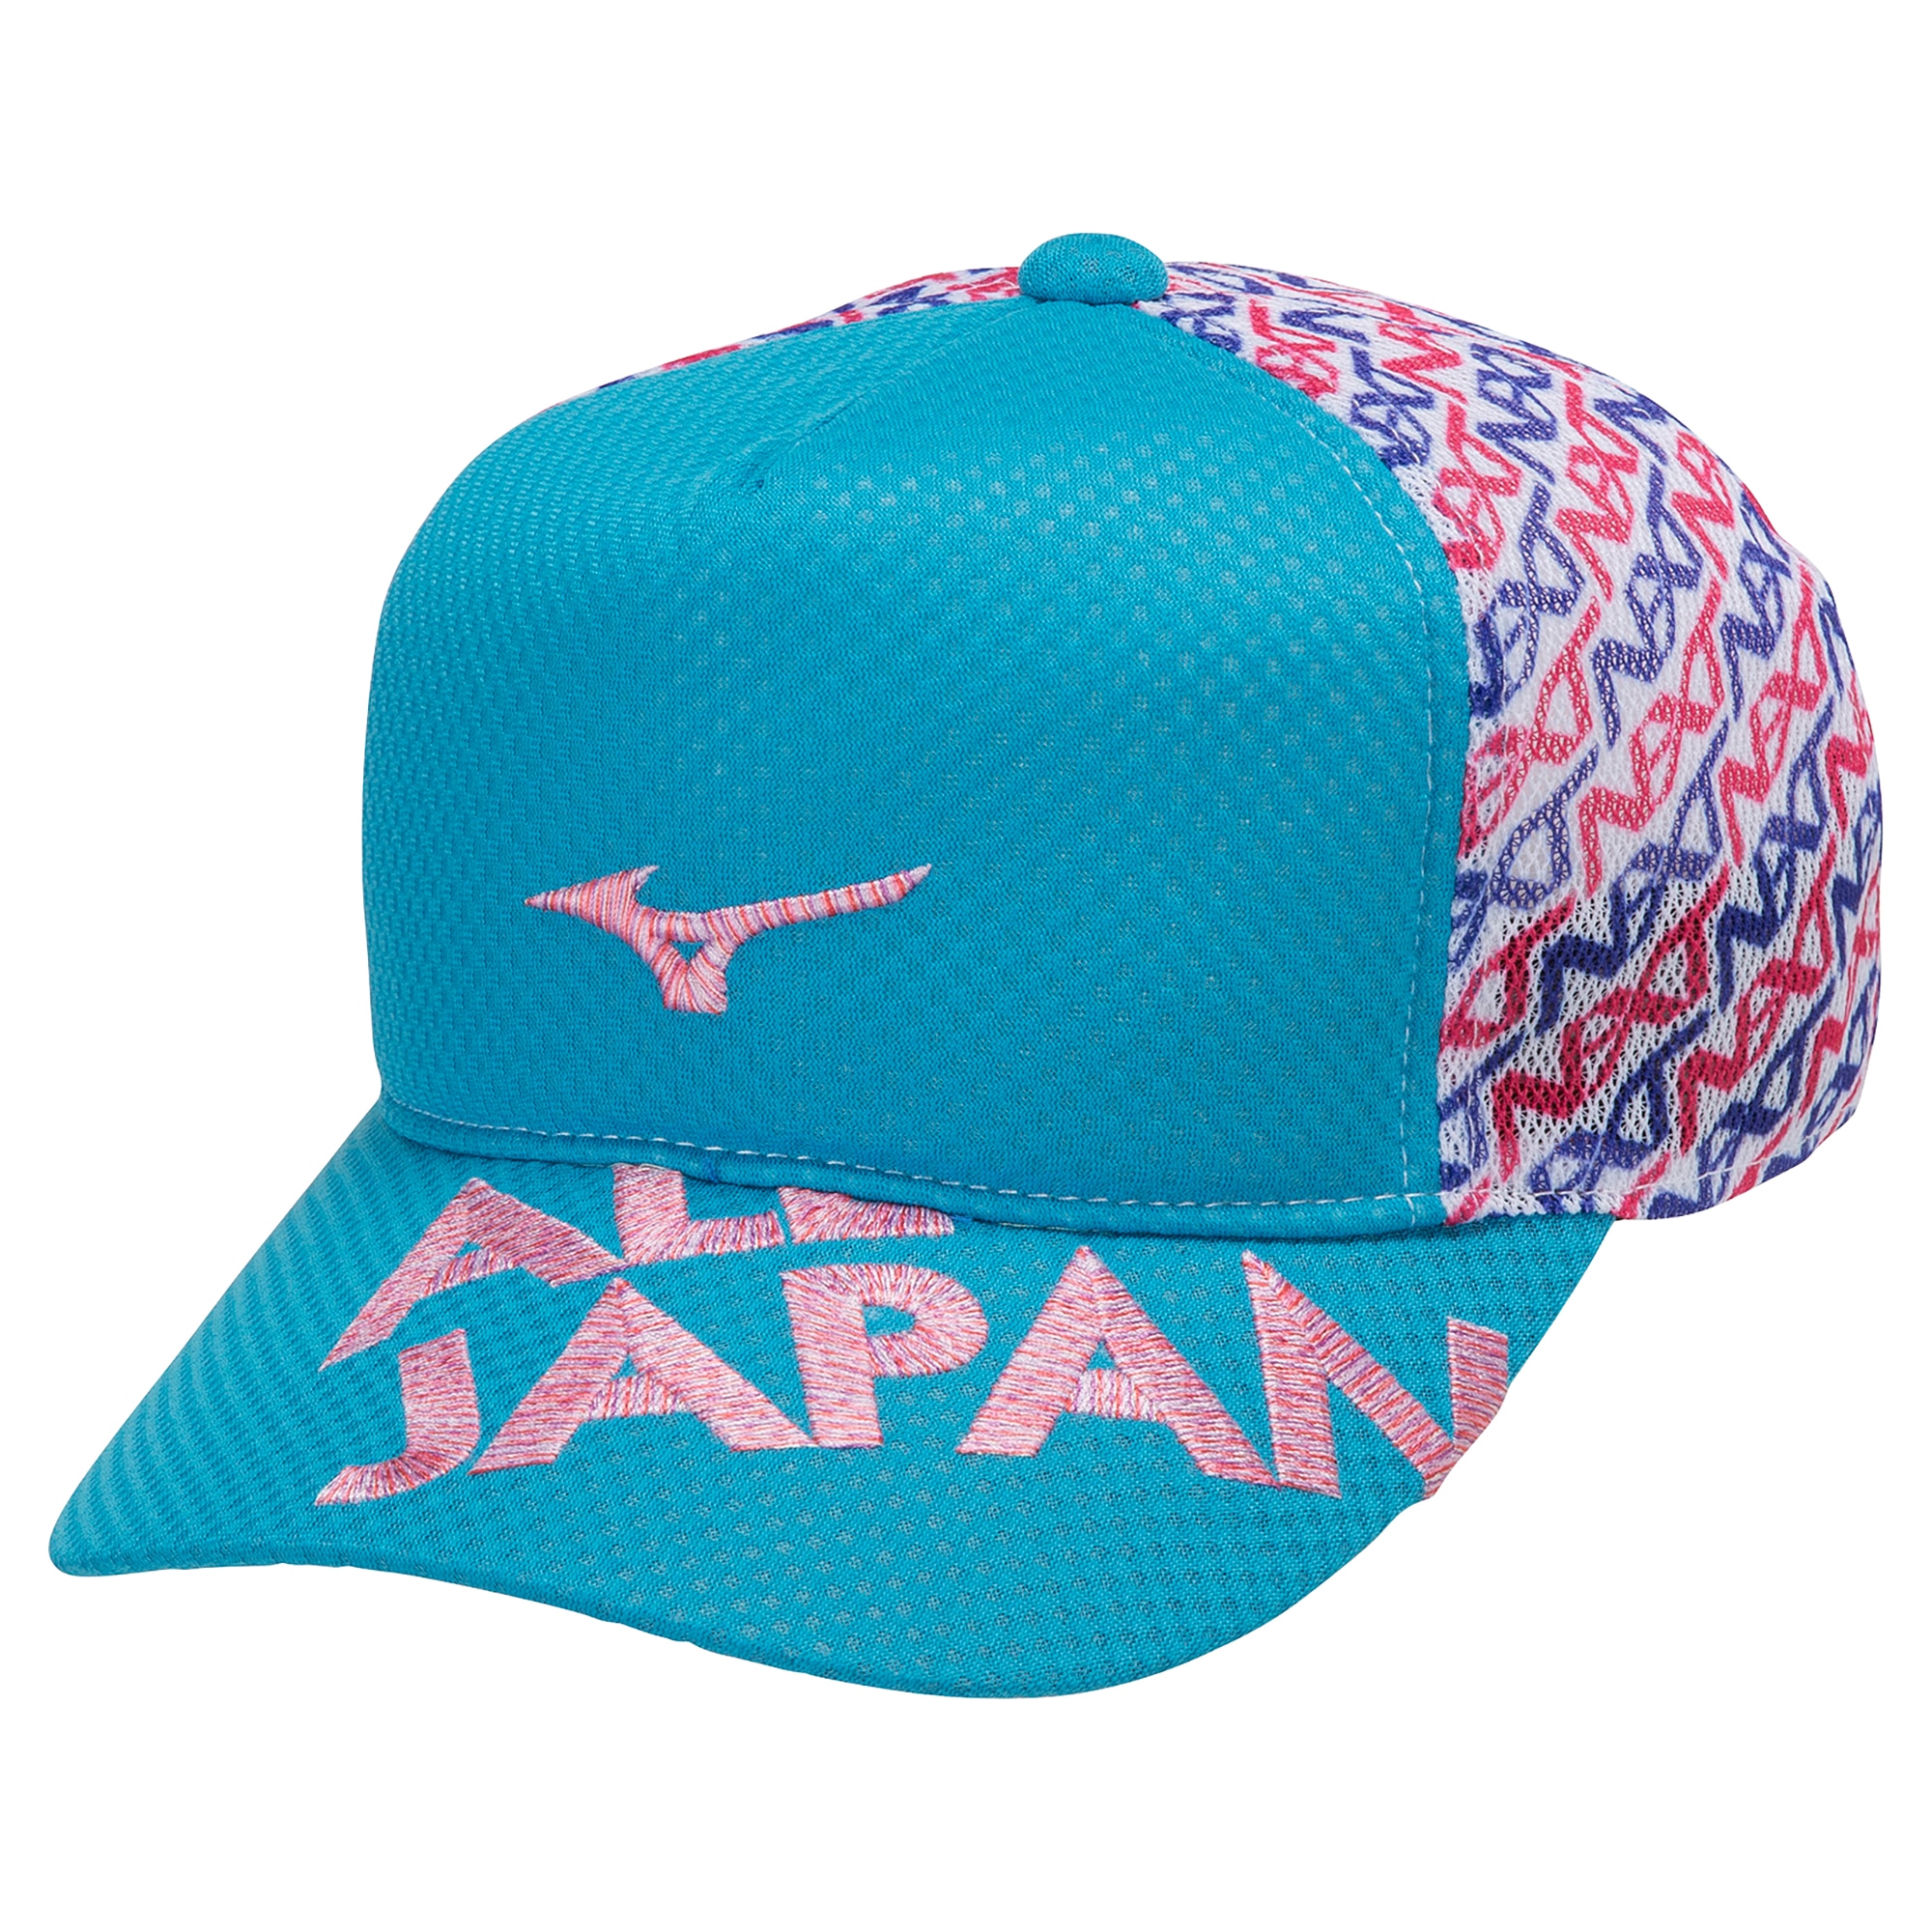 ALL JAPANキャップ[ユニセックス]|62JWAZ12|キャップ|テニス|ミズノ 